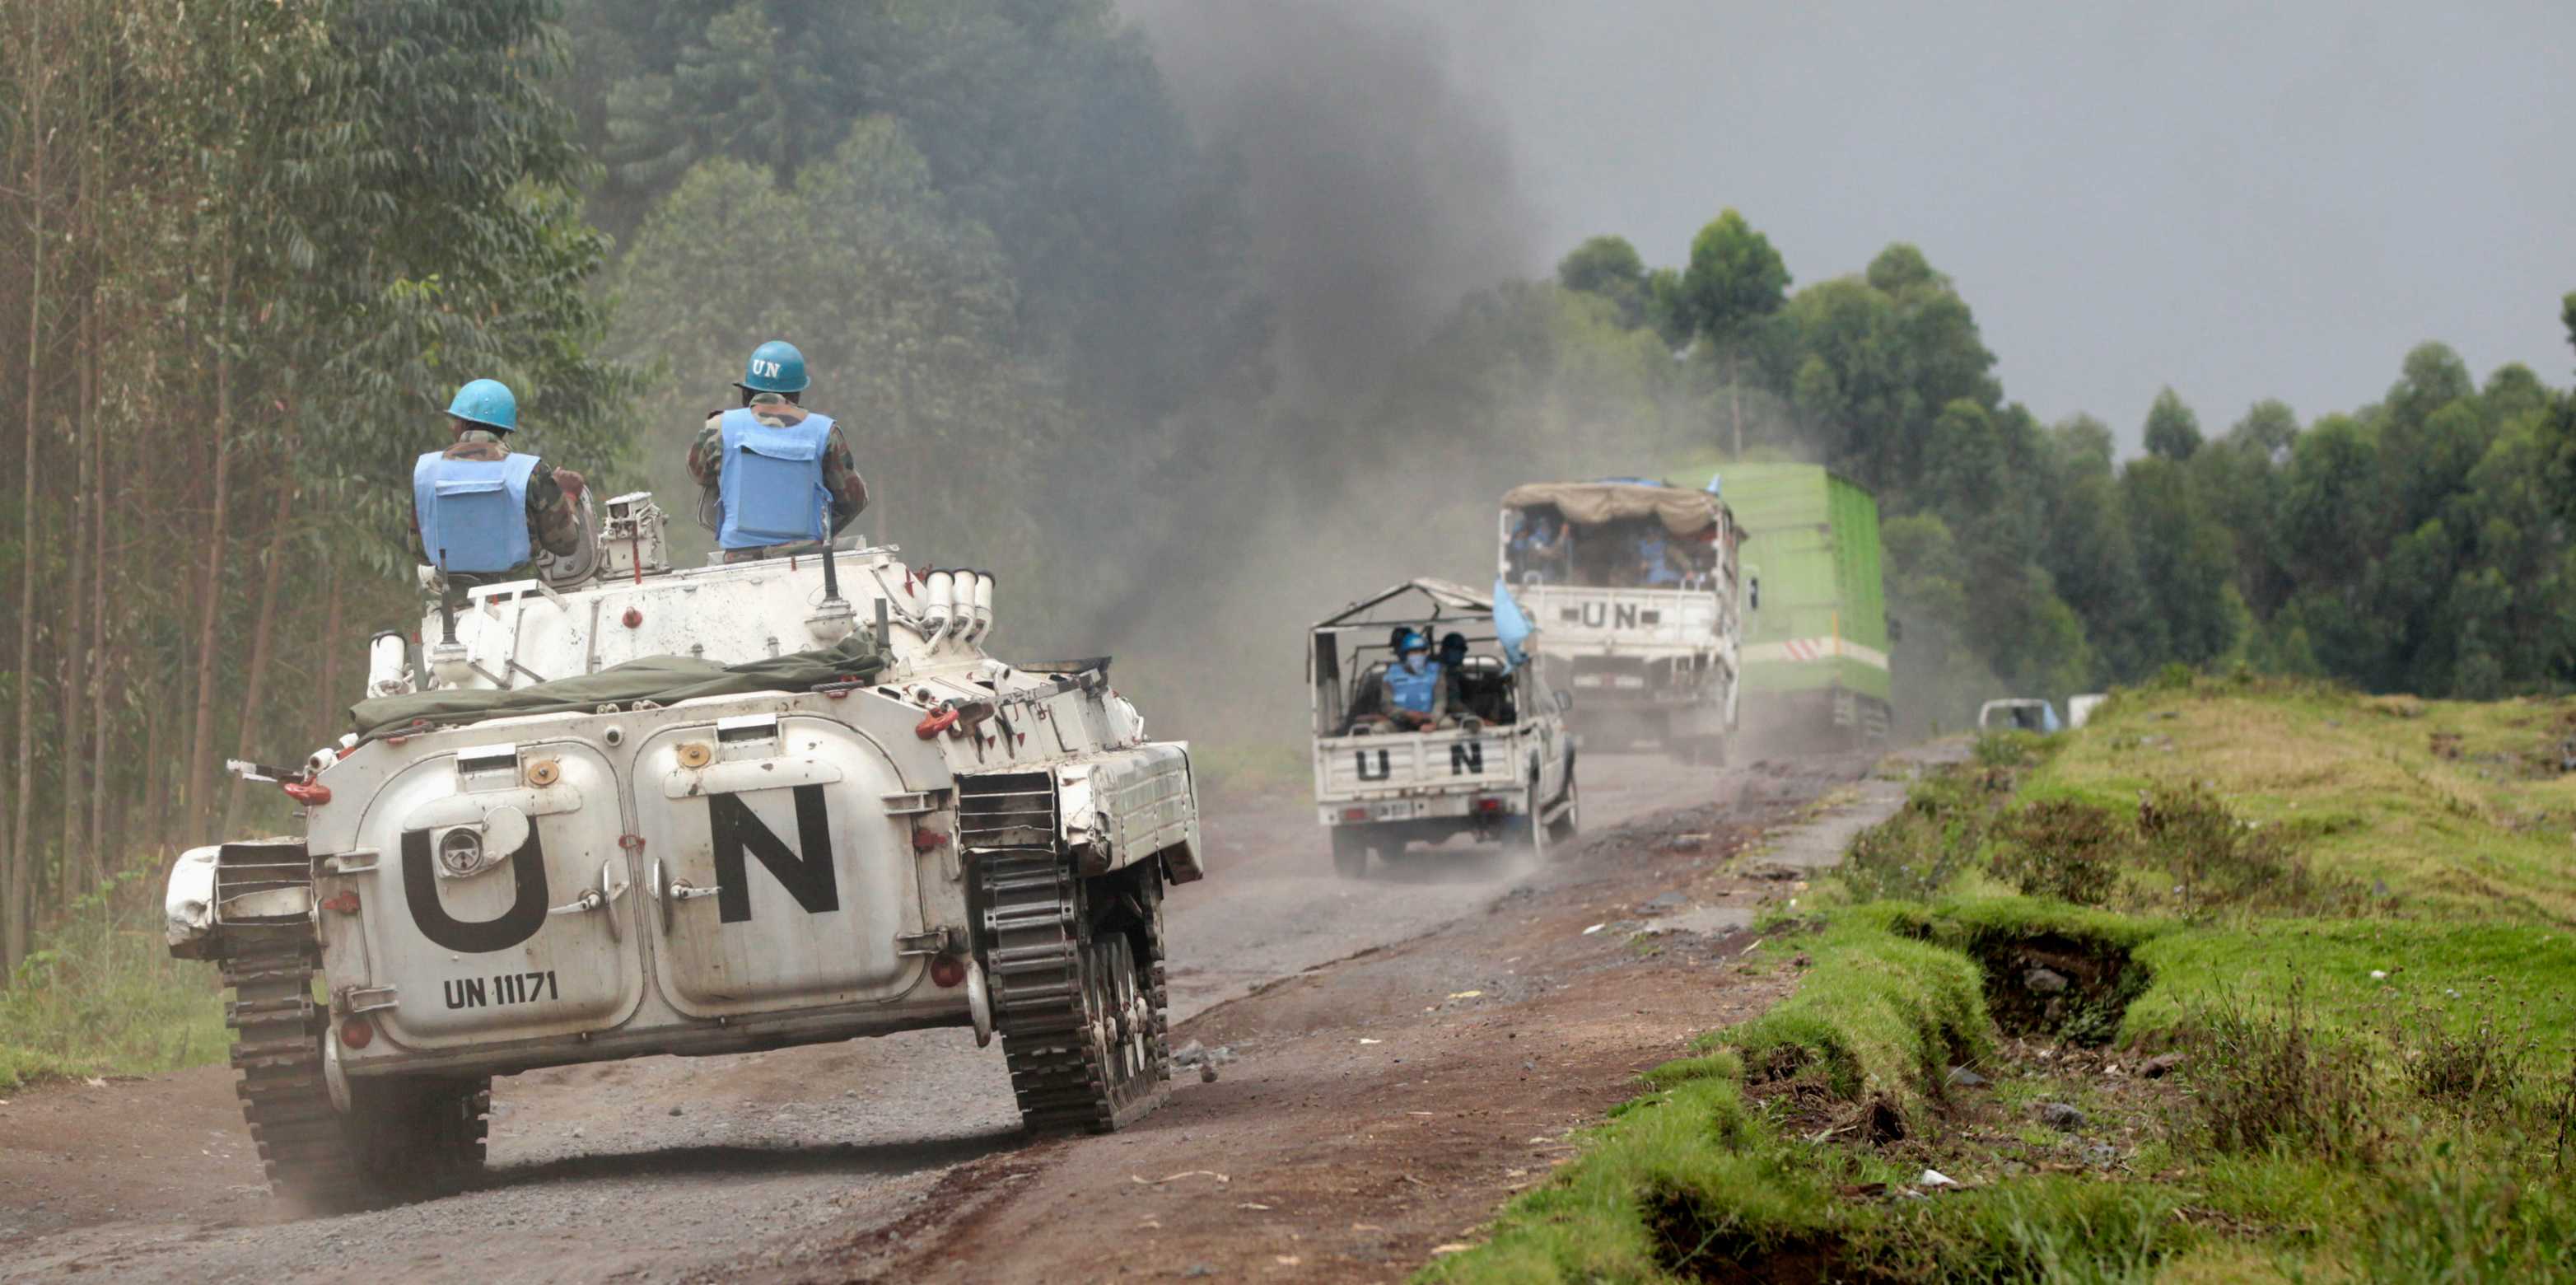 UN Peacekeeping vehicles